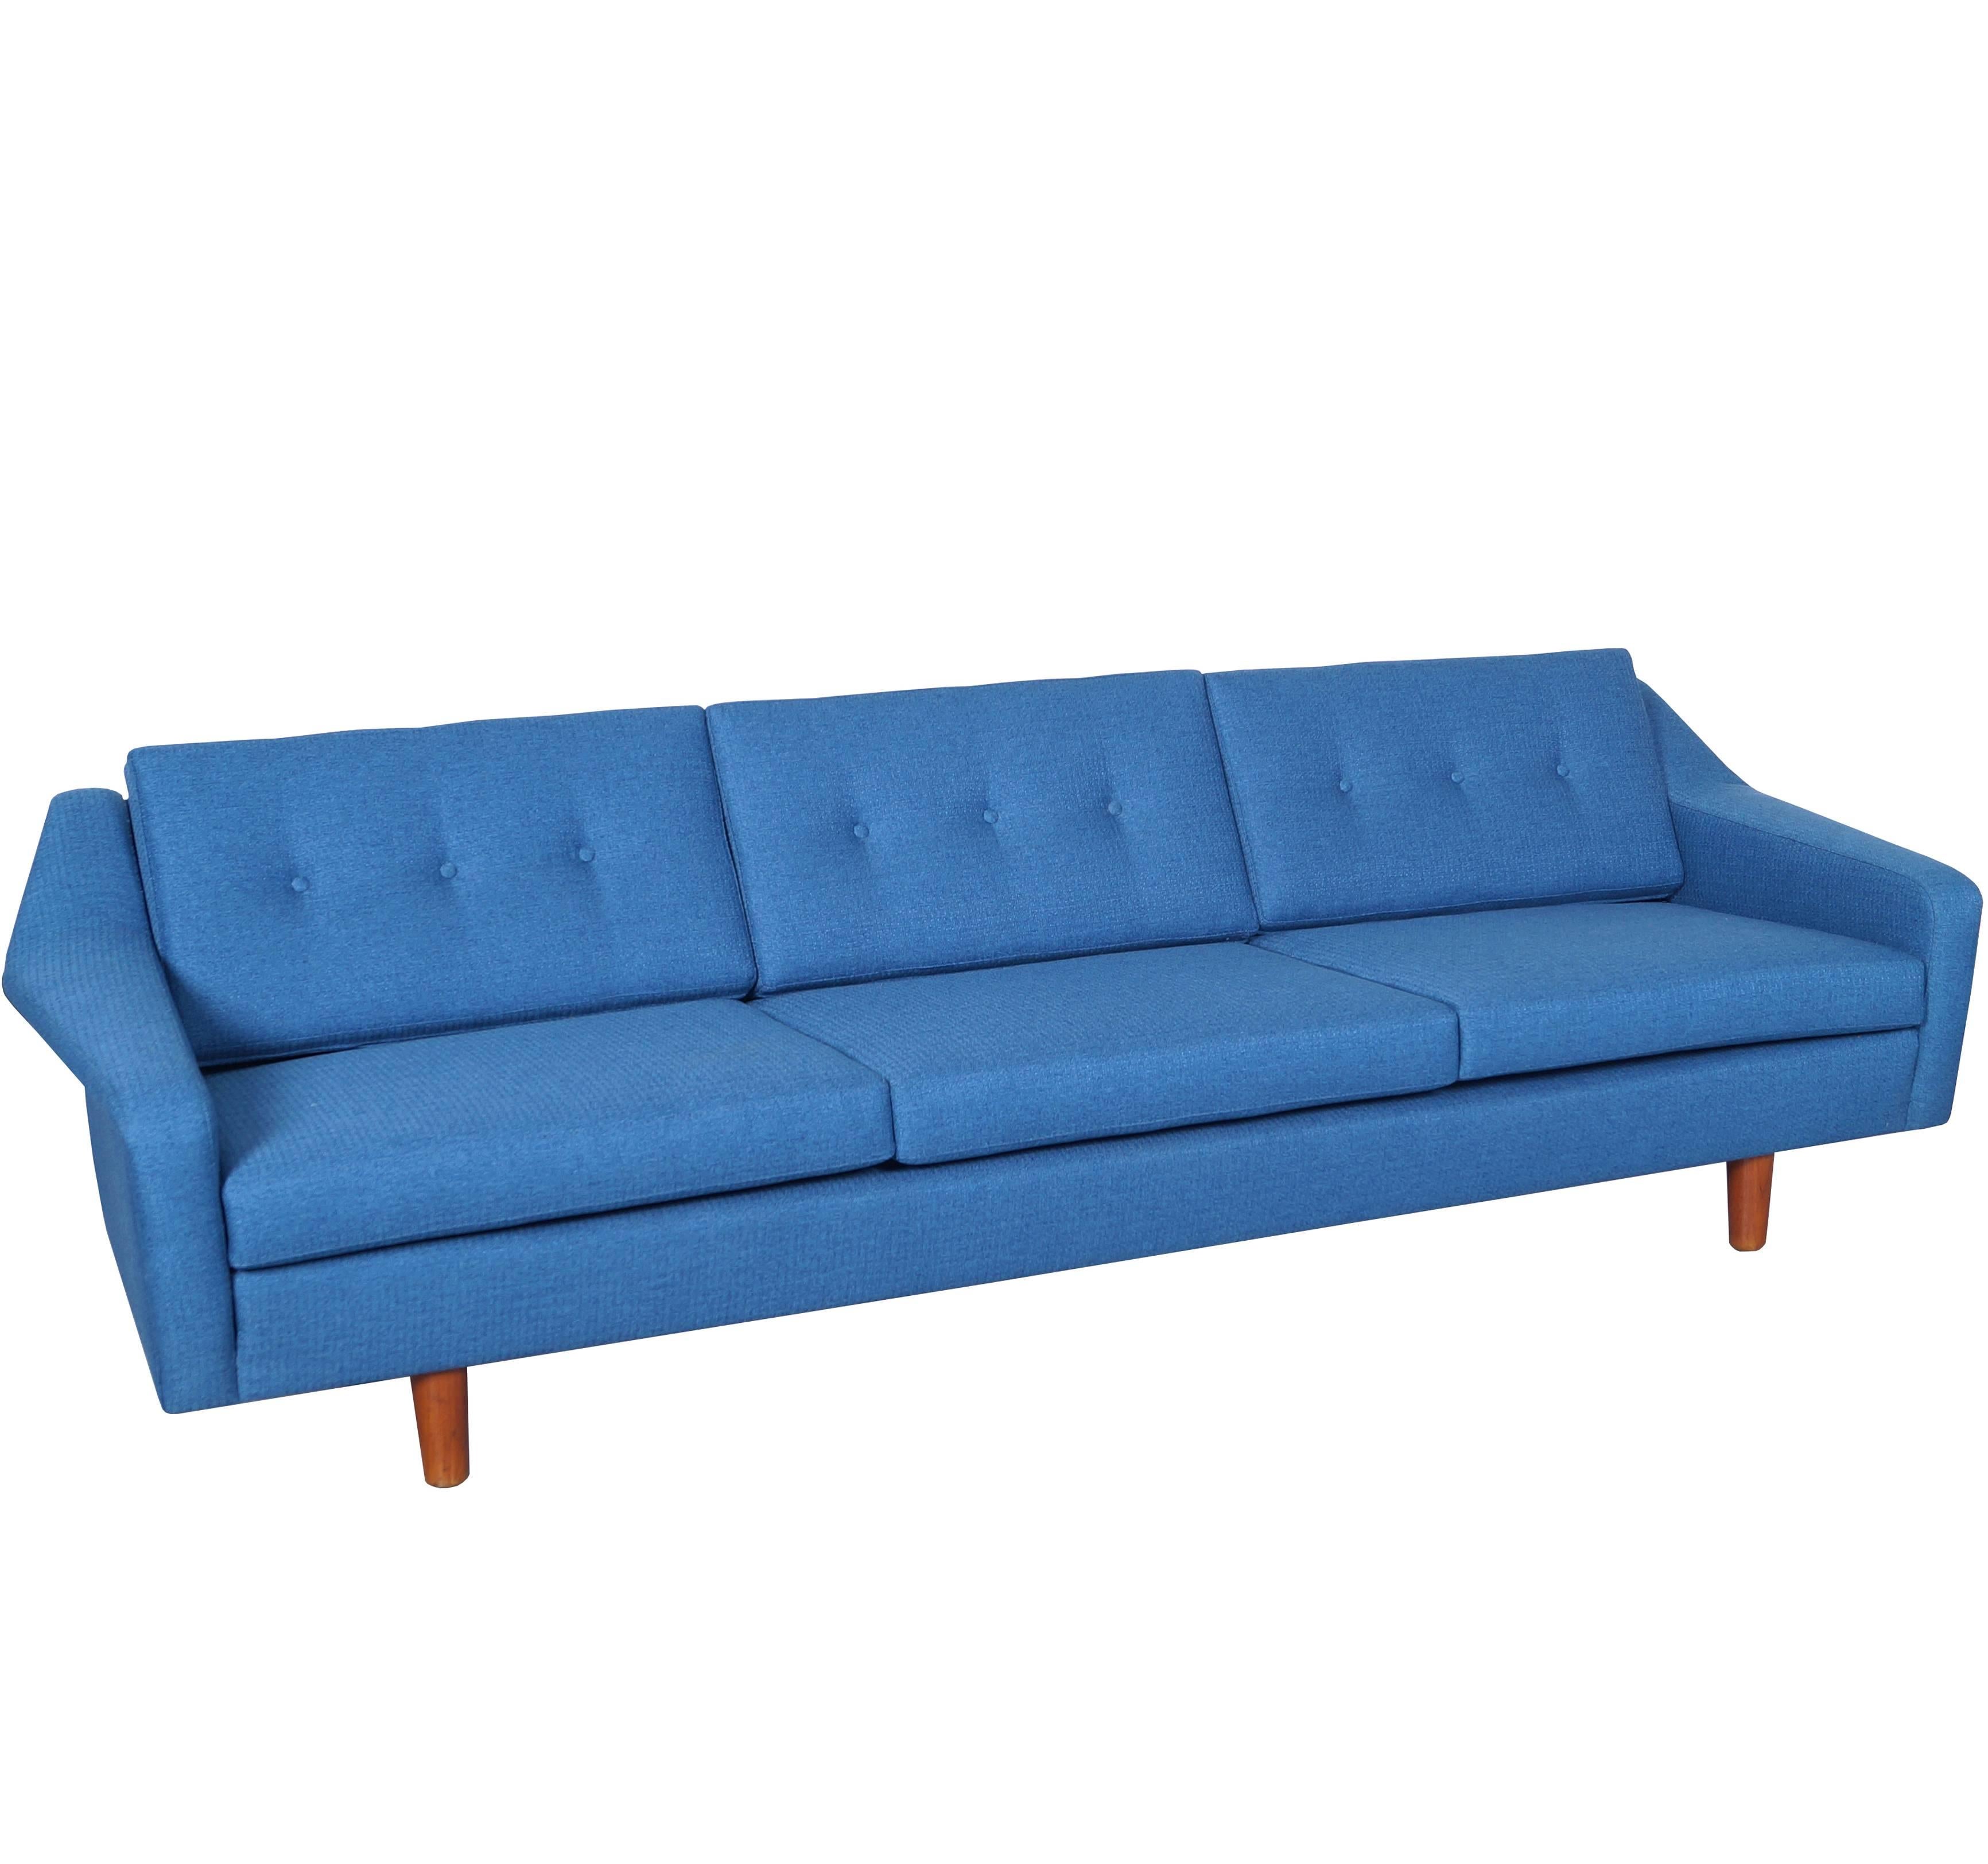 Danish Modern Sofa by Illums Bolighus